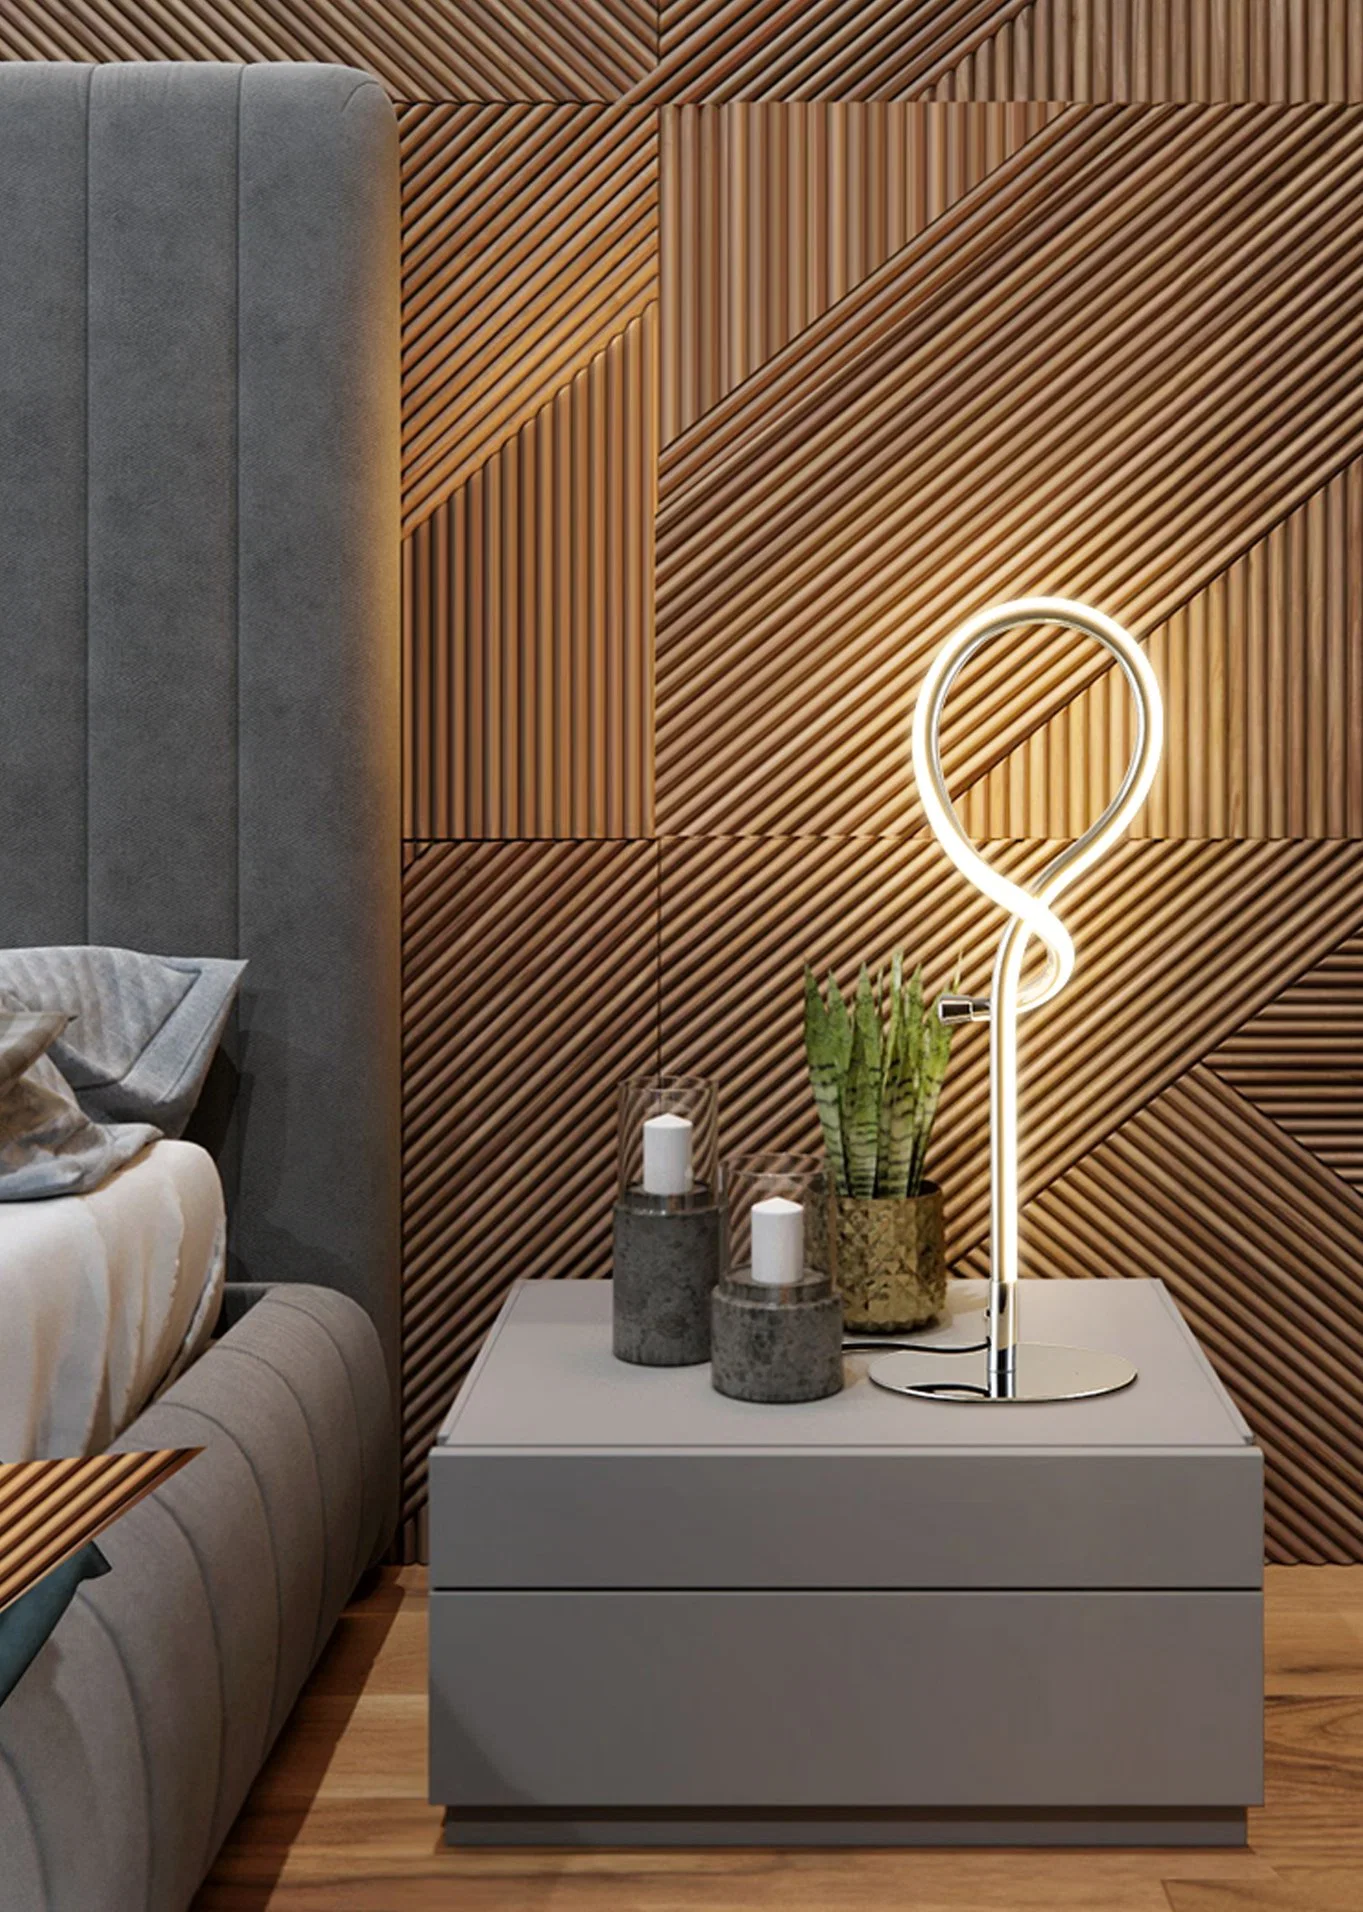 Modern Bedroom Lighting Table Acrylic Modern Lamp Floor Lamp